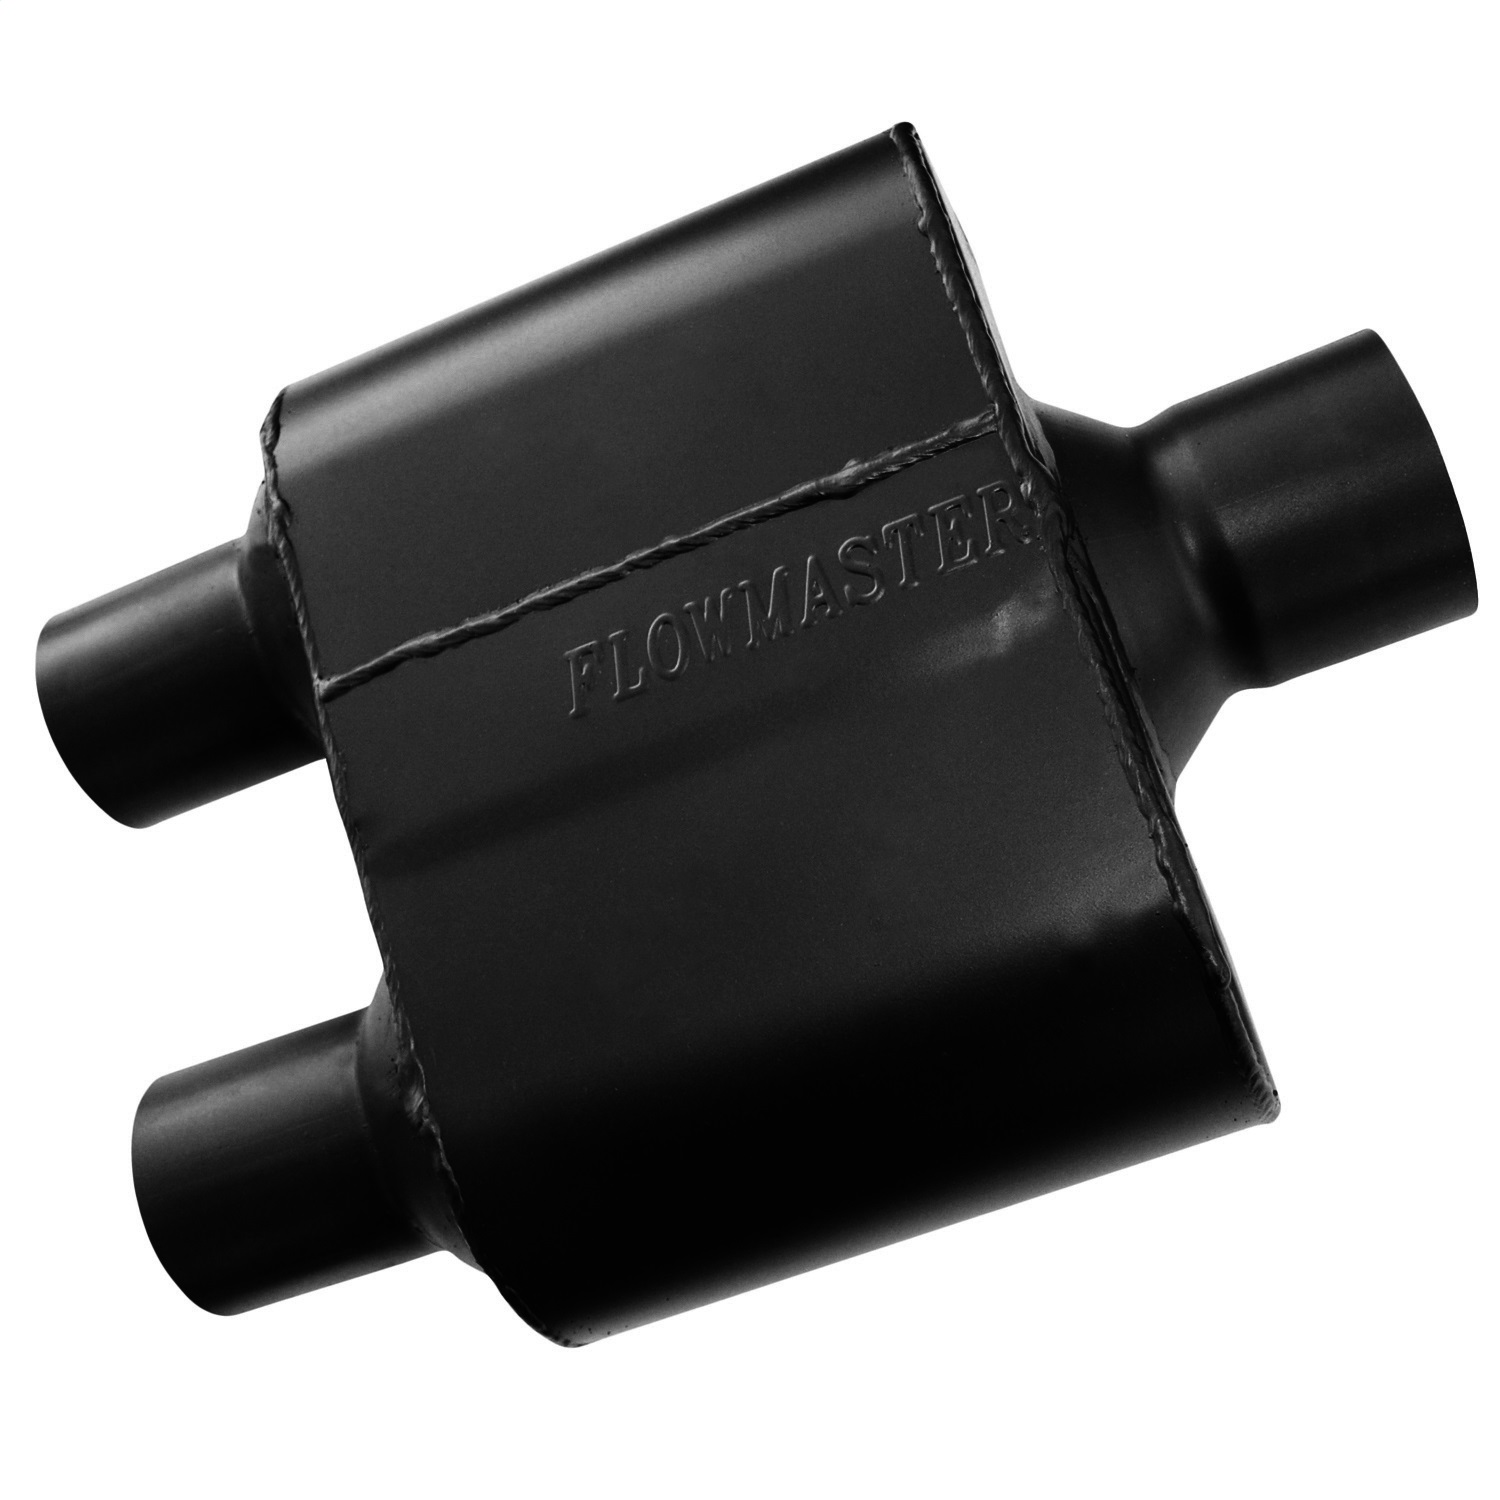 Flowmaster Flowmaster 8430152 Super 10 Series Muffler Fits 13-14 Mustang